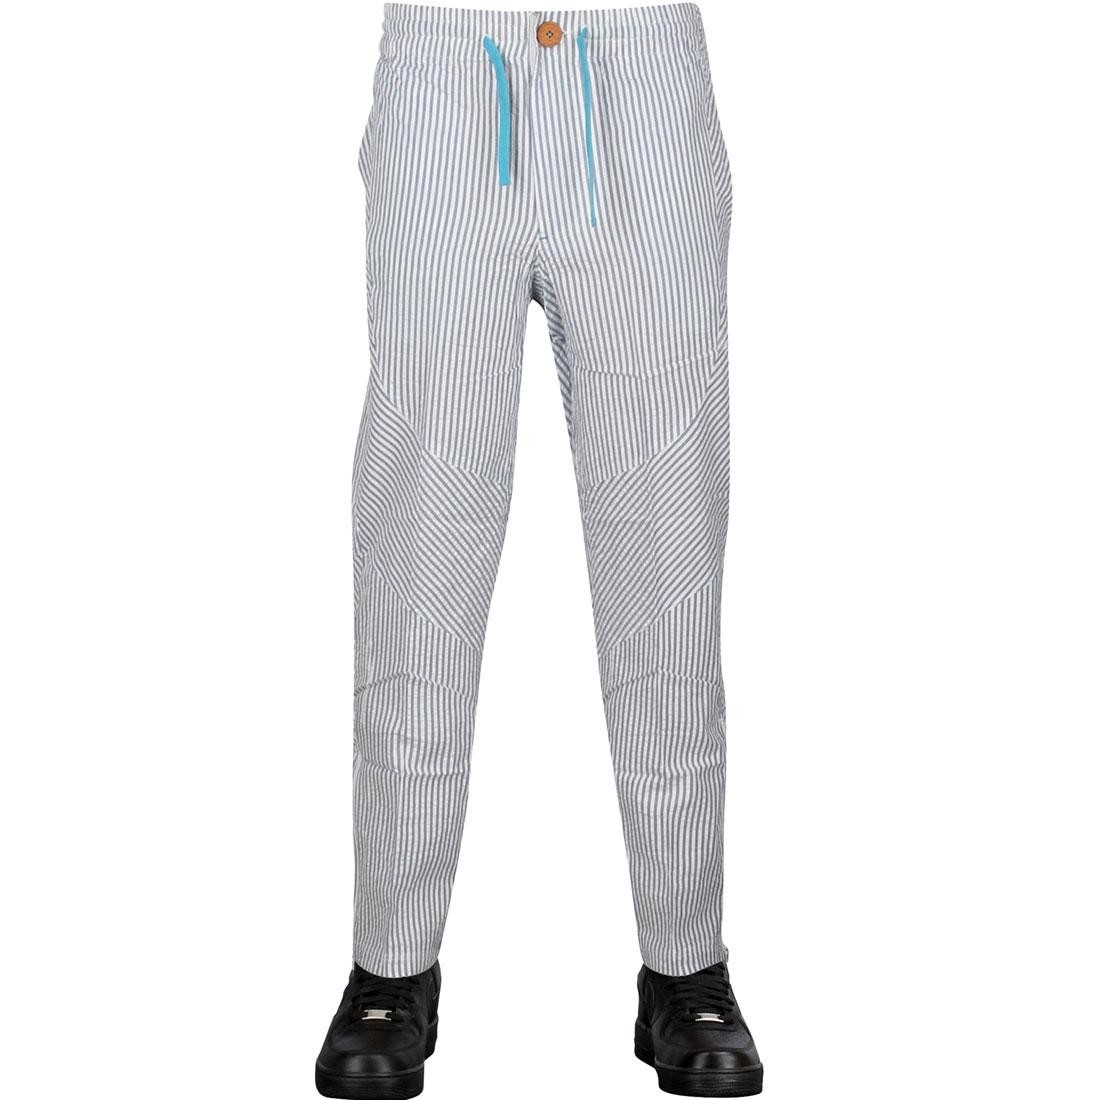 Under Crown Stripe Pants (blue / white)